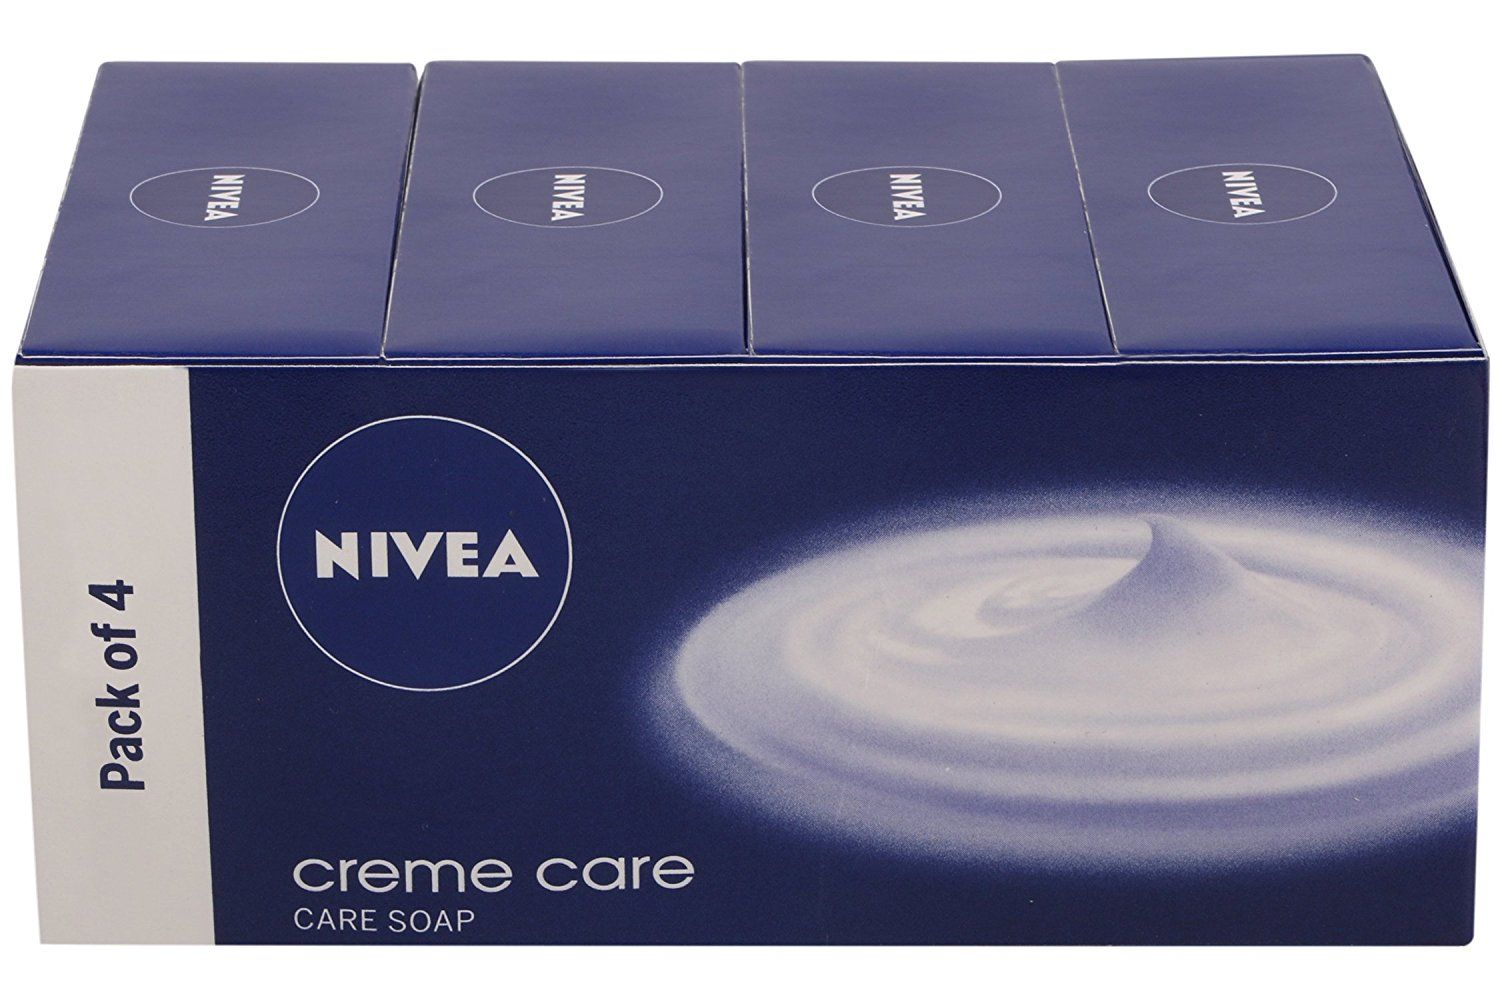 Nivea Creme Care Soap, 125g (Pack of 4) at Flat 25% off